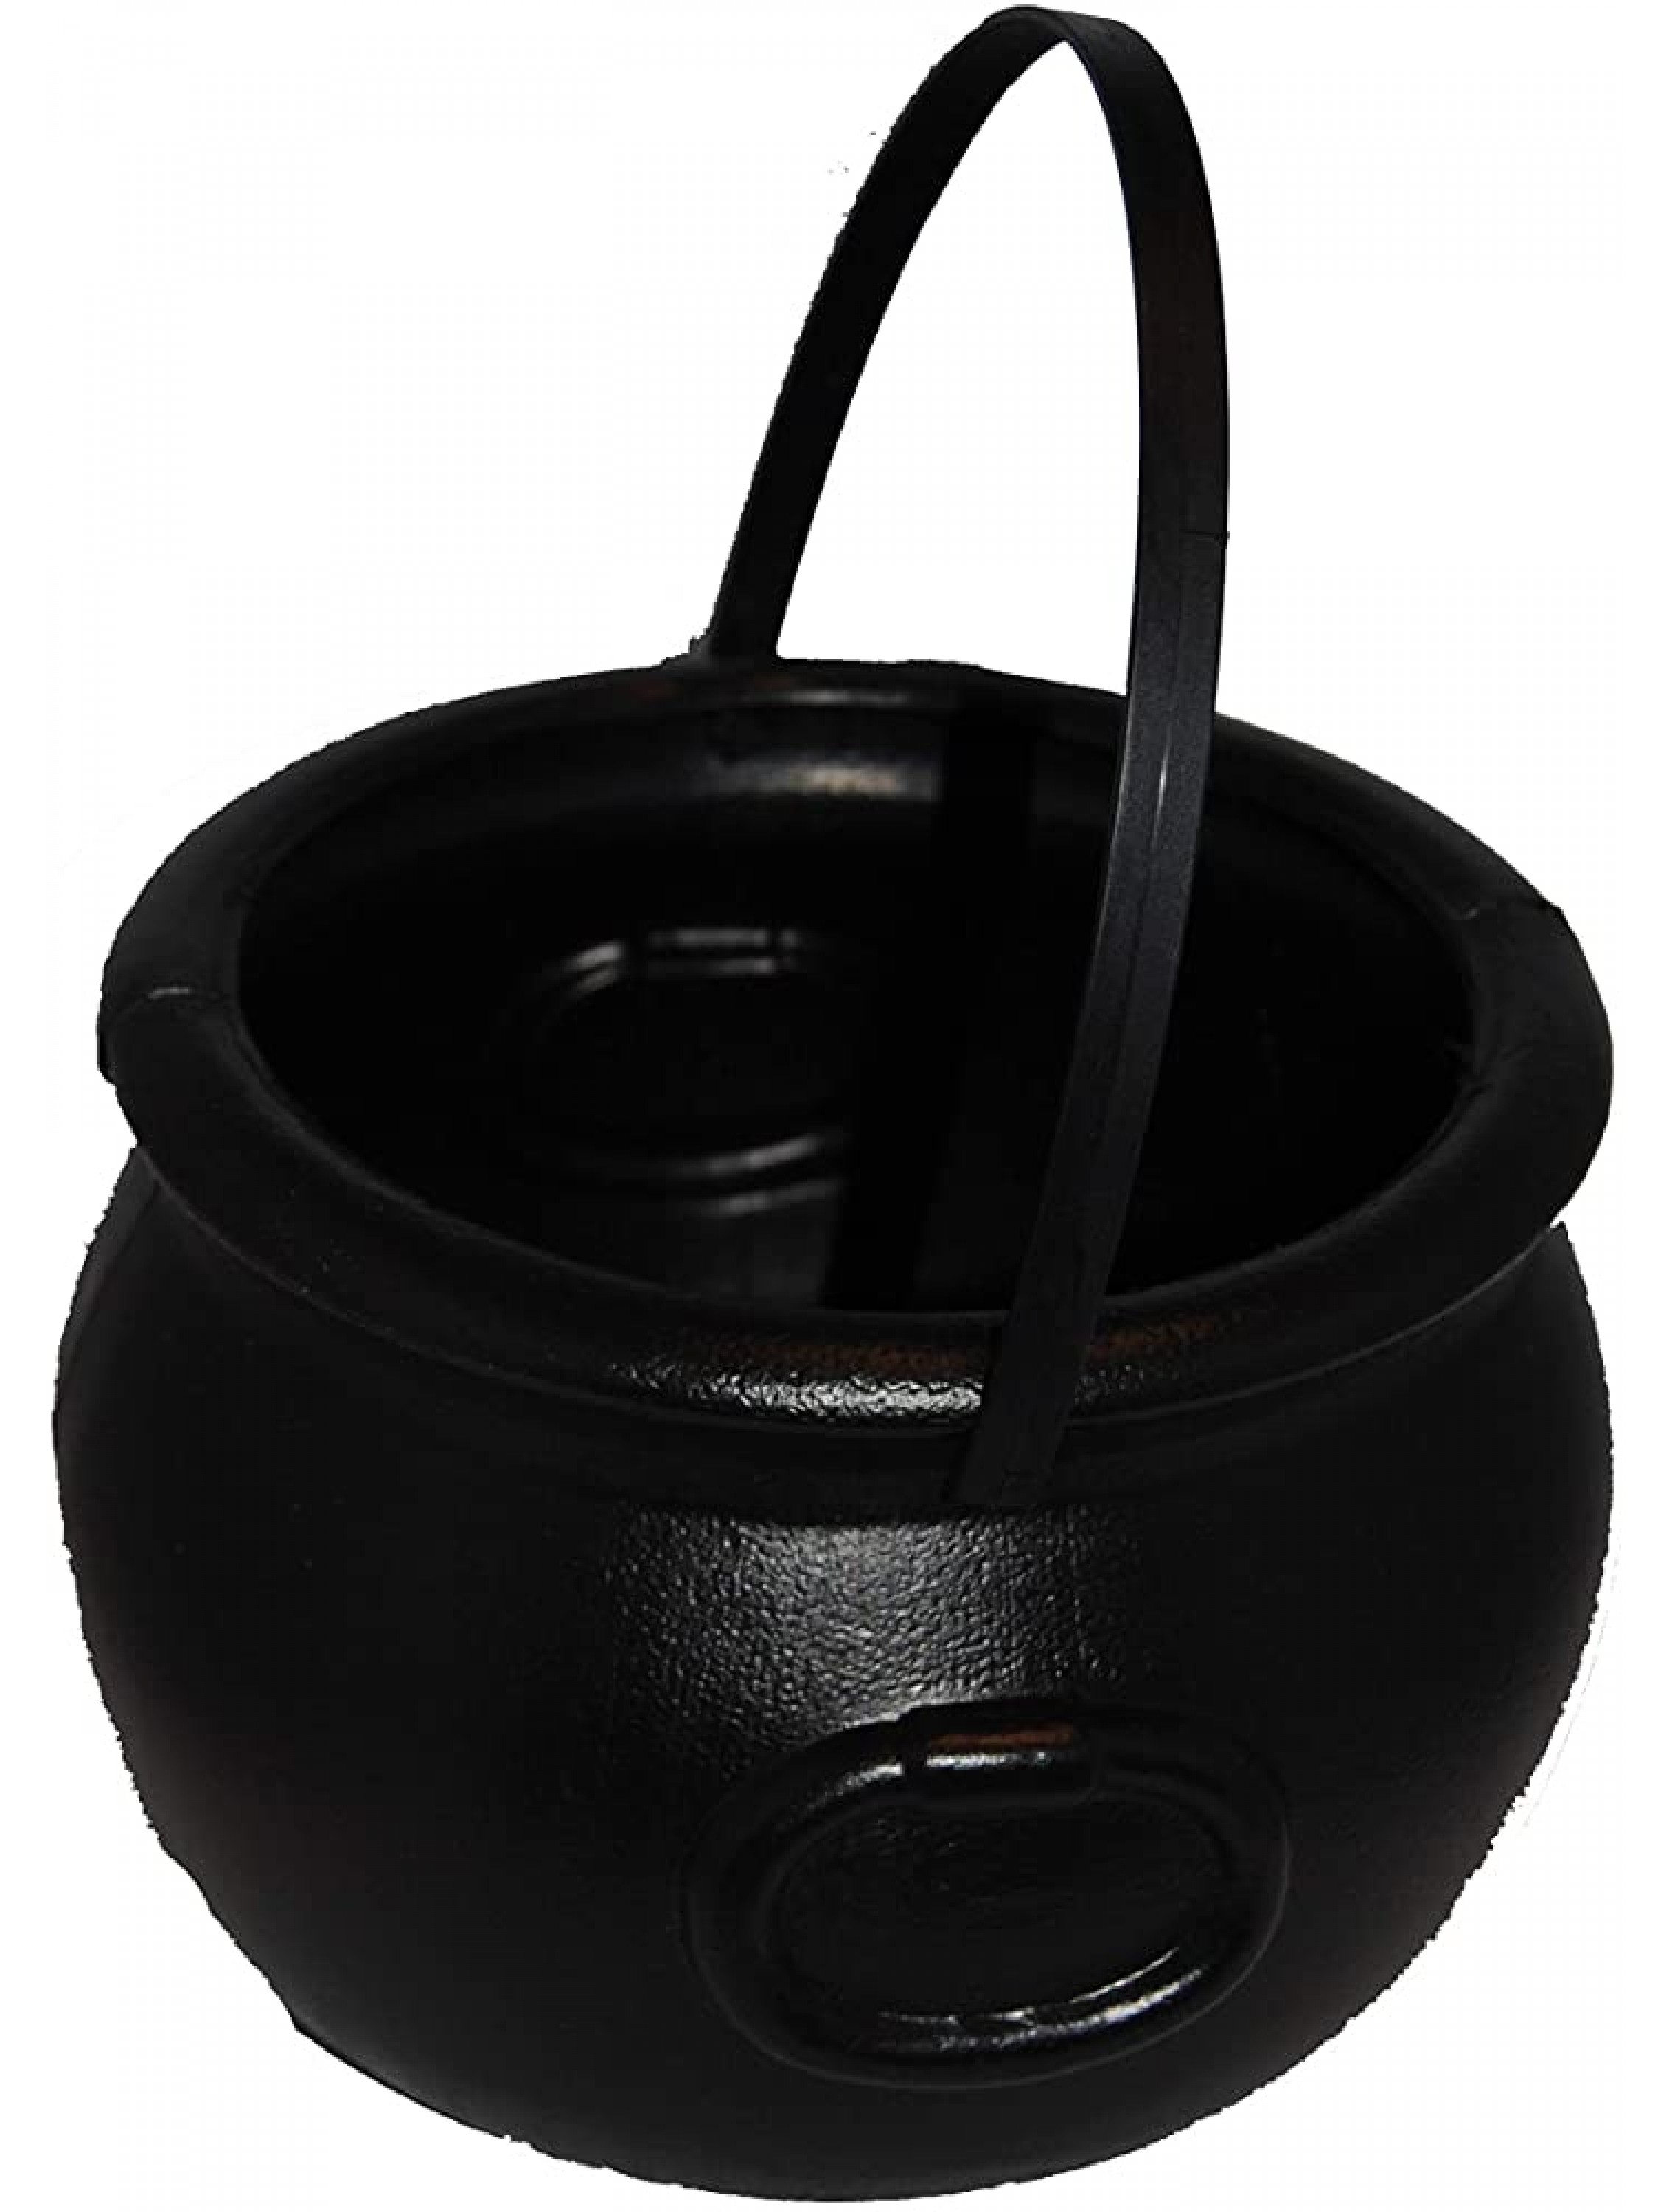 BERT'S Garden Black Plastic Planter Antique Looking Cauldron Pot 9 with Handle - BMKE868MM